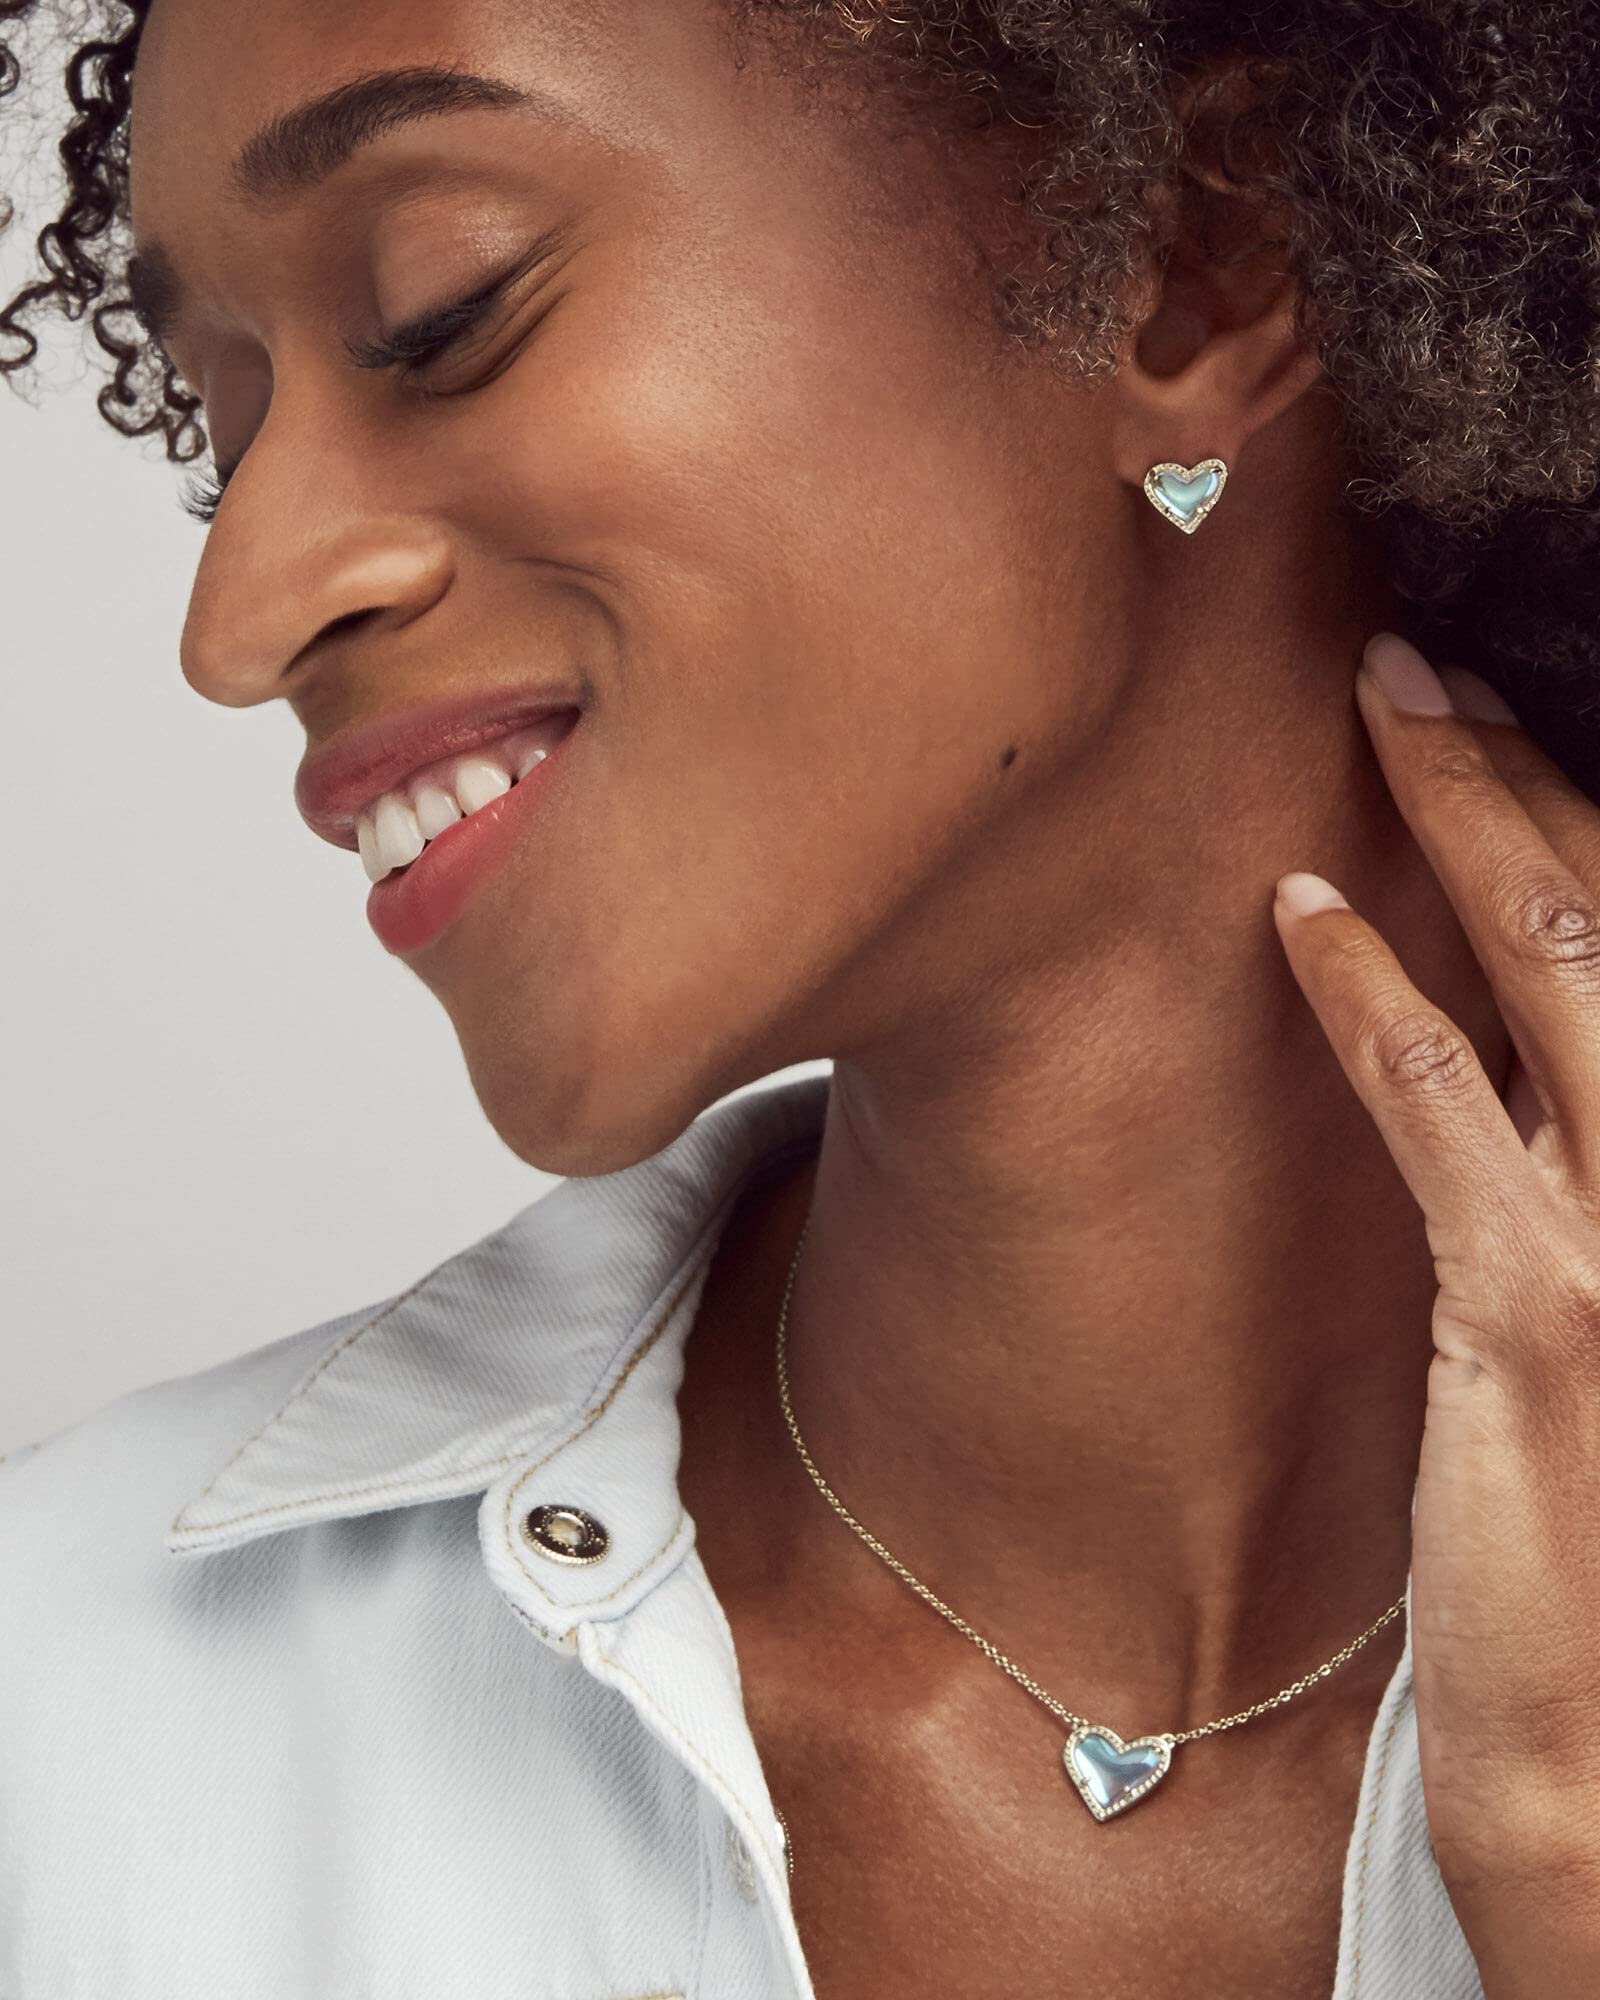 Kendra Scott Ari Heart Adjustable Length Pendant Necklace, Ari Heart Stud Earrings, and Ari Heart Link Chain Bracelet Bundle, Fashion Jewelry, 14K Rose Gold-Plated, Pink Drusy